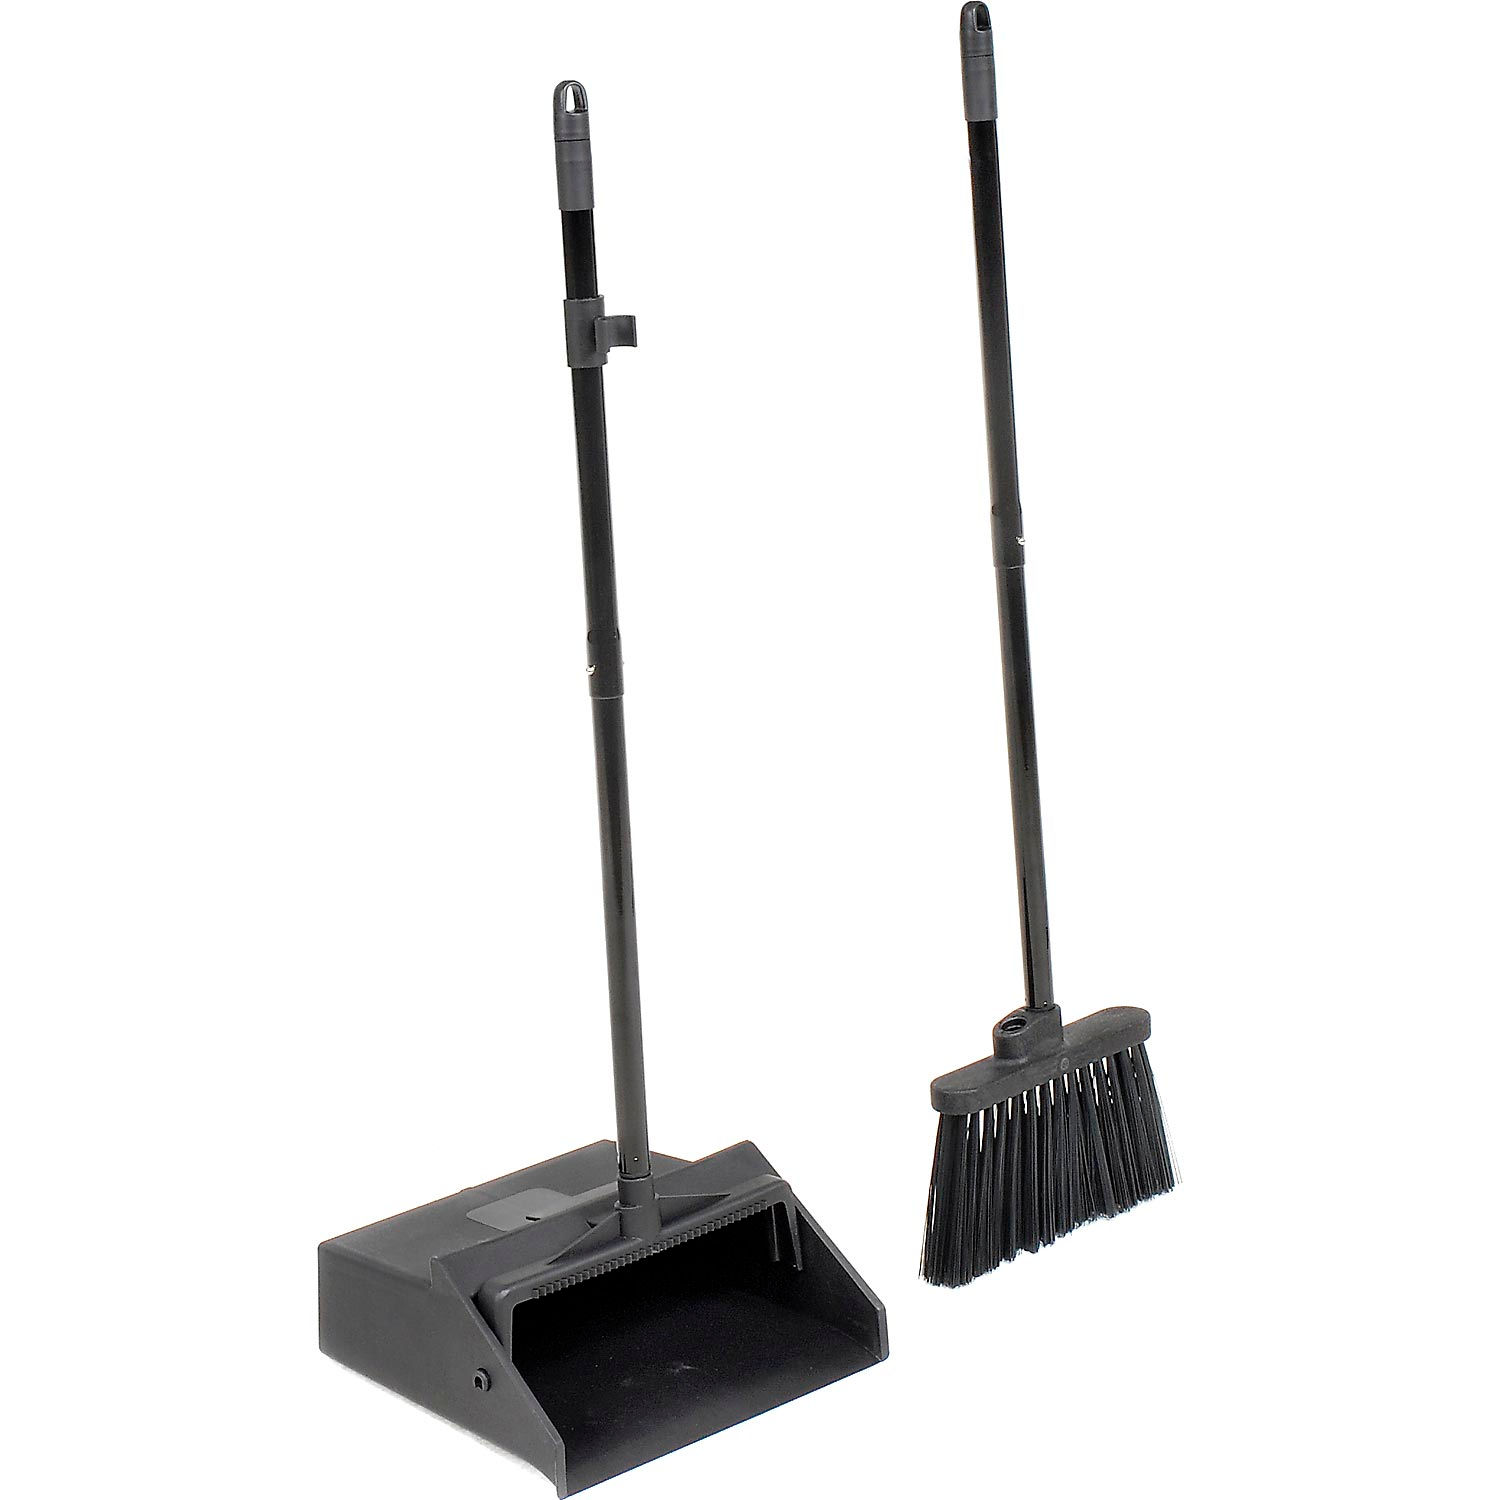 lobby dustpan and broom